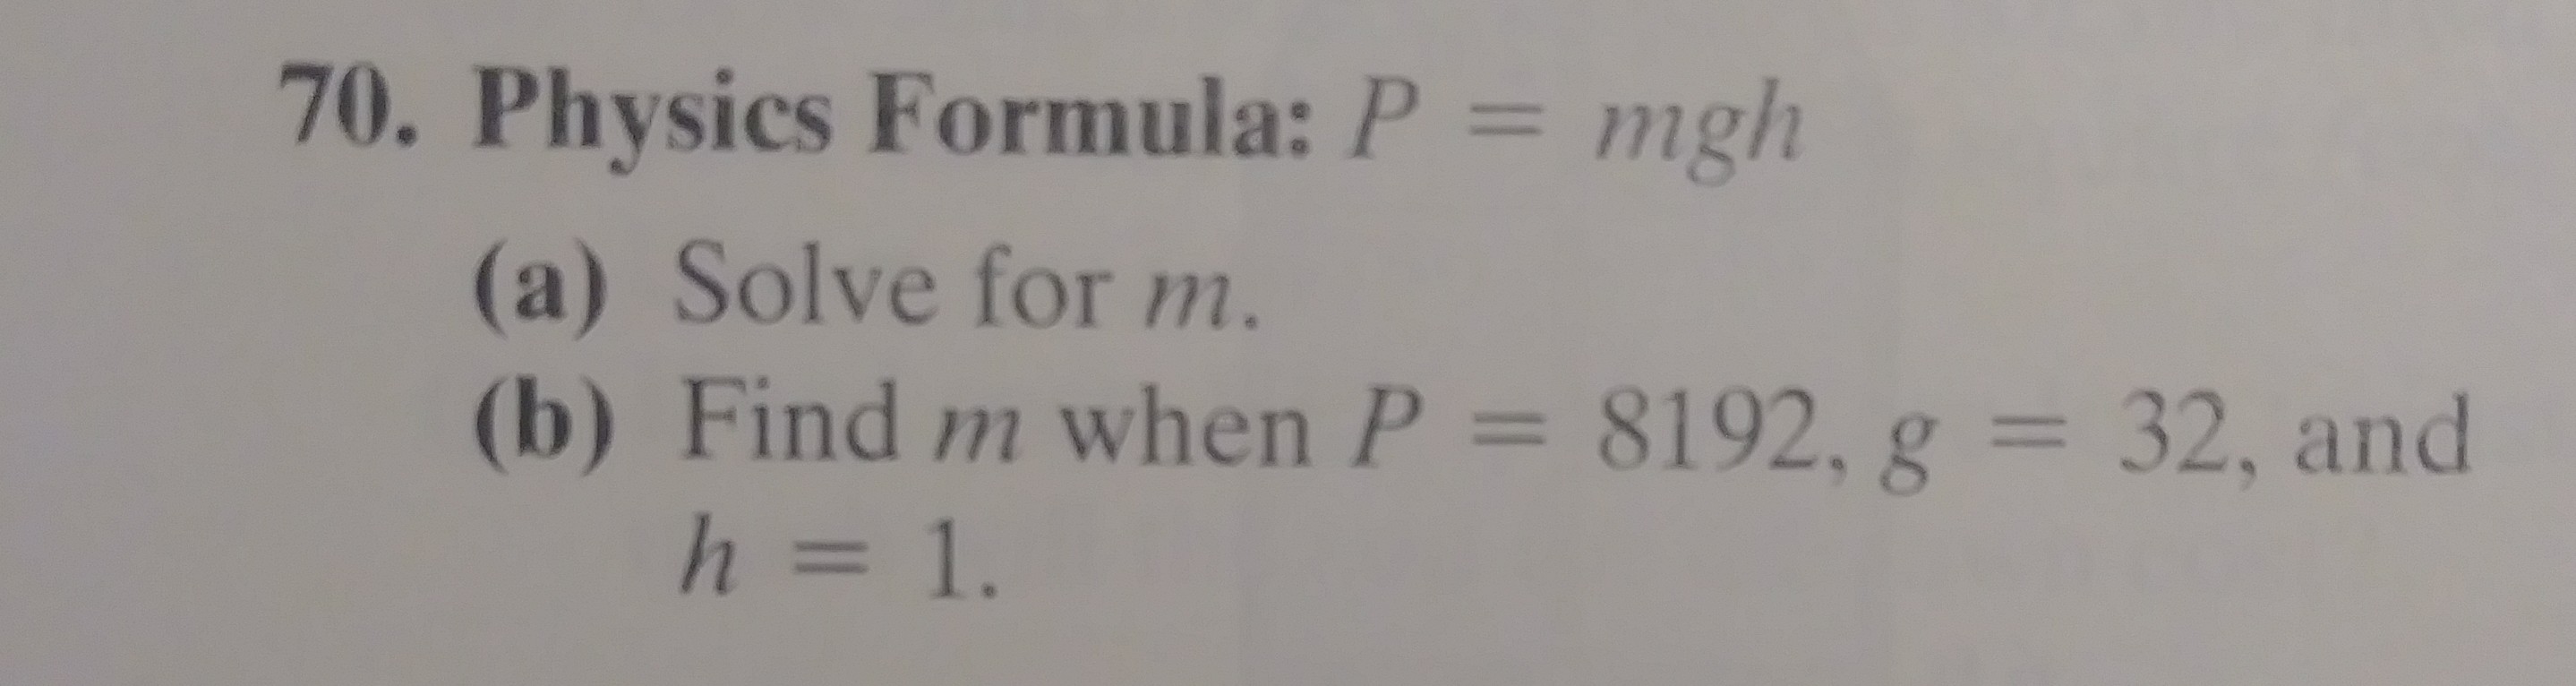 Answered 70 Physics Formula P Mgh 3d A Bartleby